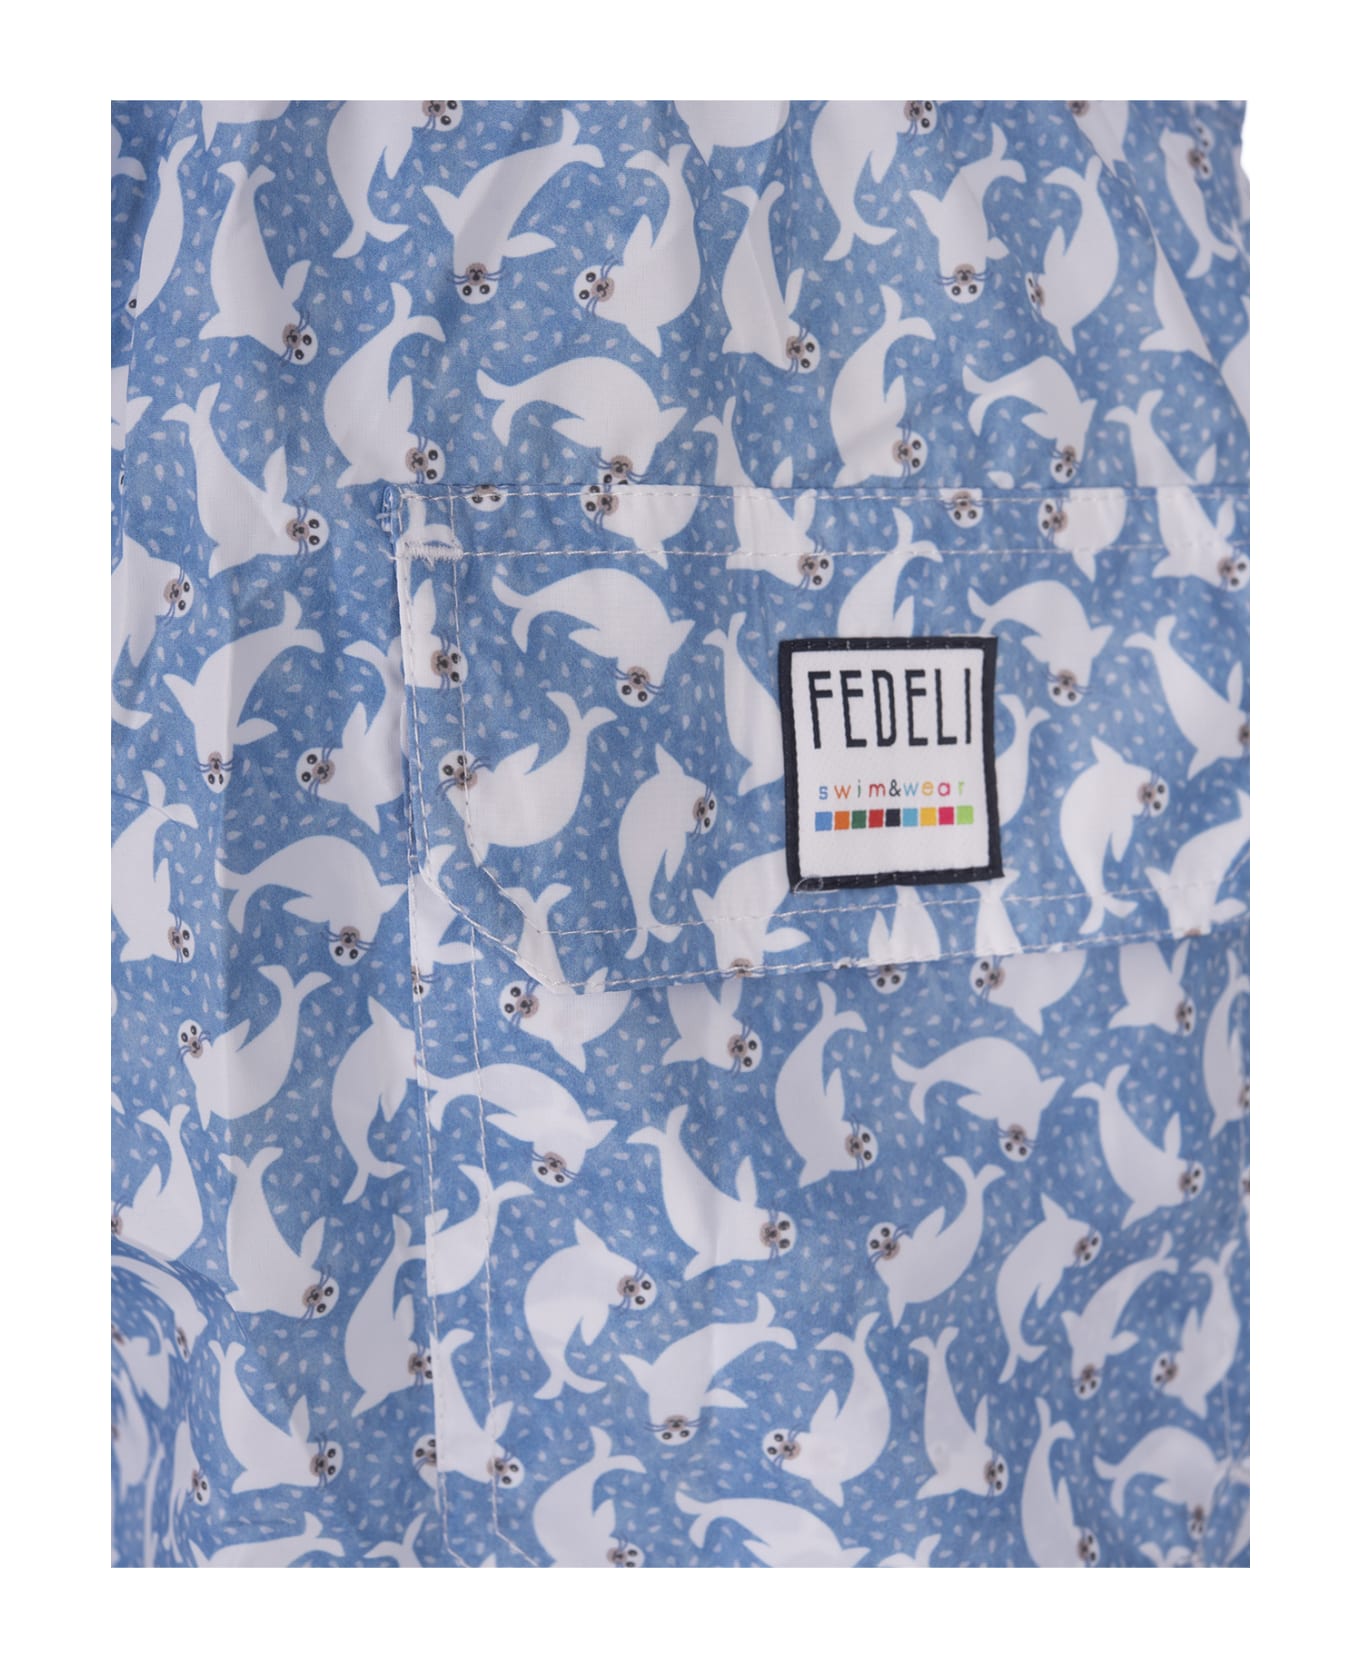 Fedeli Light Blue Swim Shorts With Seals Pattern - Blue スイムトランクス